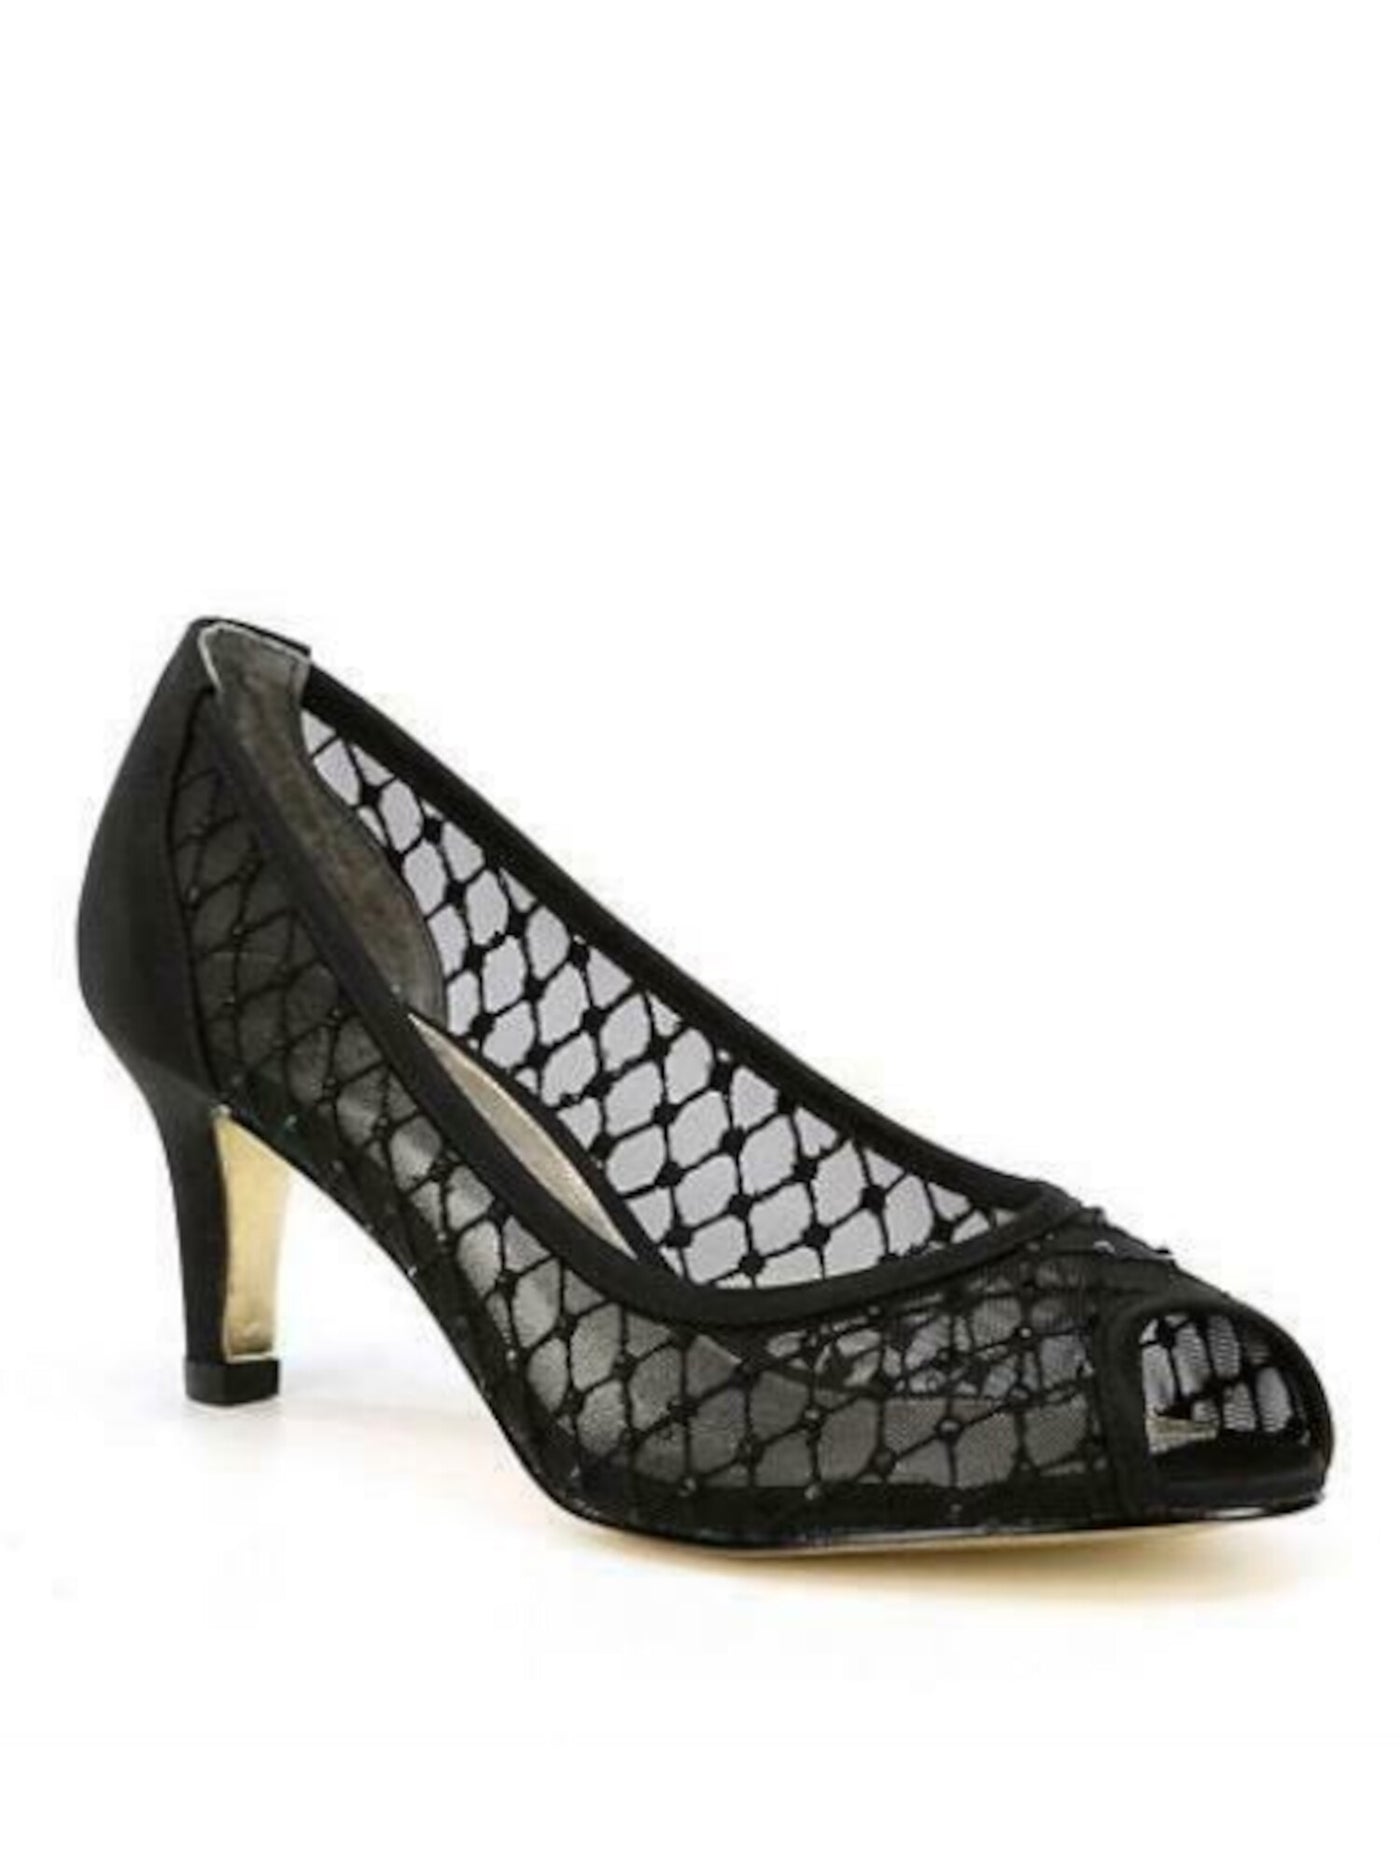 ADRIANNA PAPELL Womens Black Rhinestone Padded Jamie Peep Toe Kitten Heel Slip On Dress Pumps Shoes 12 M